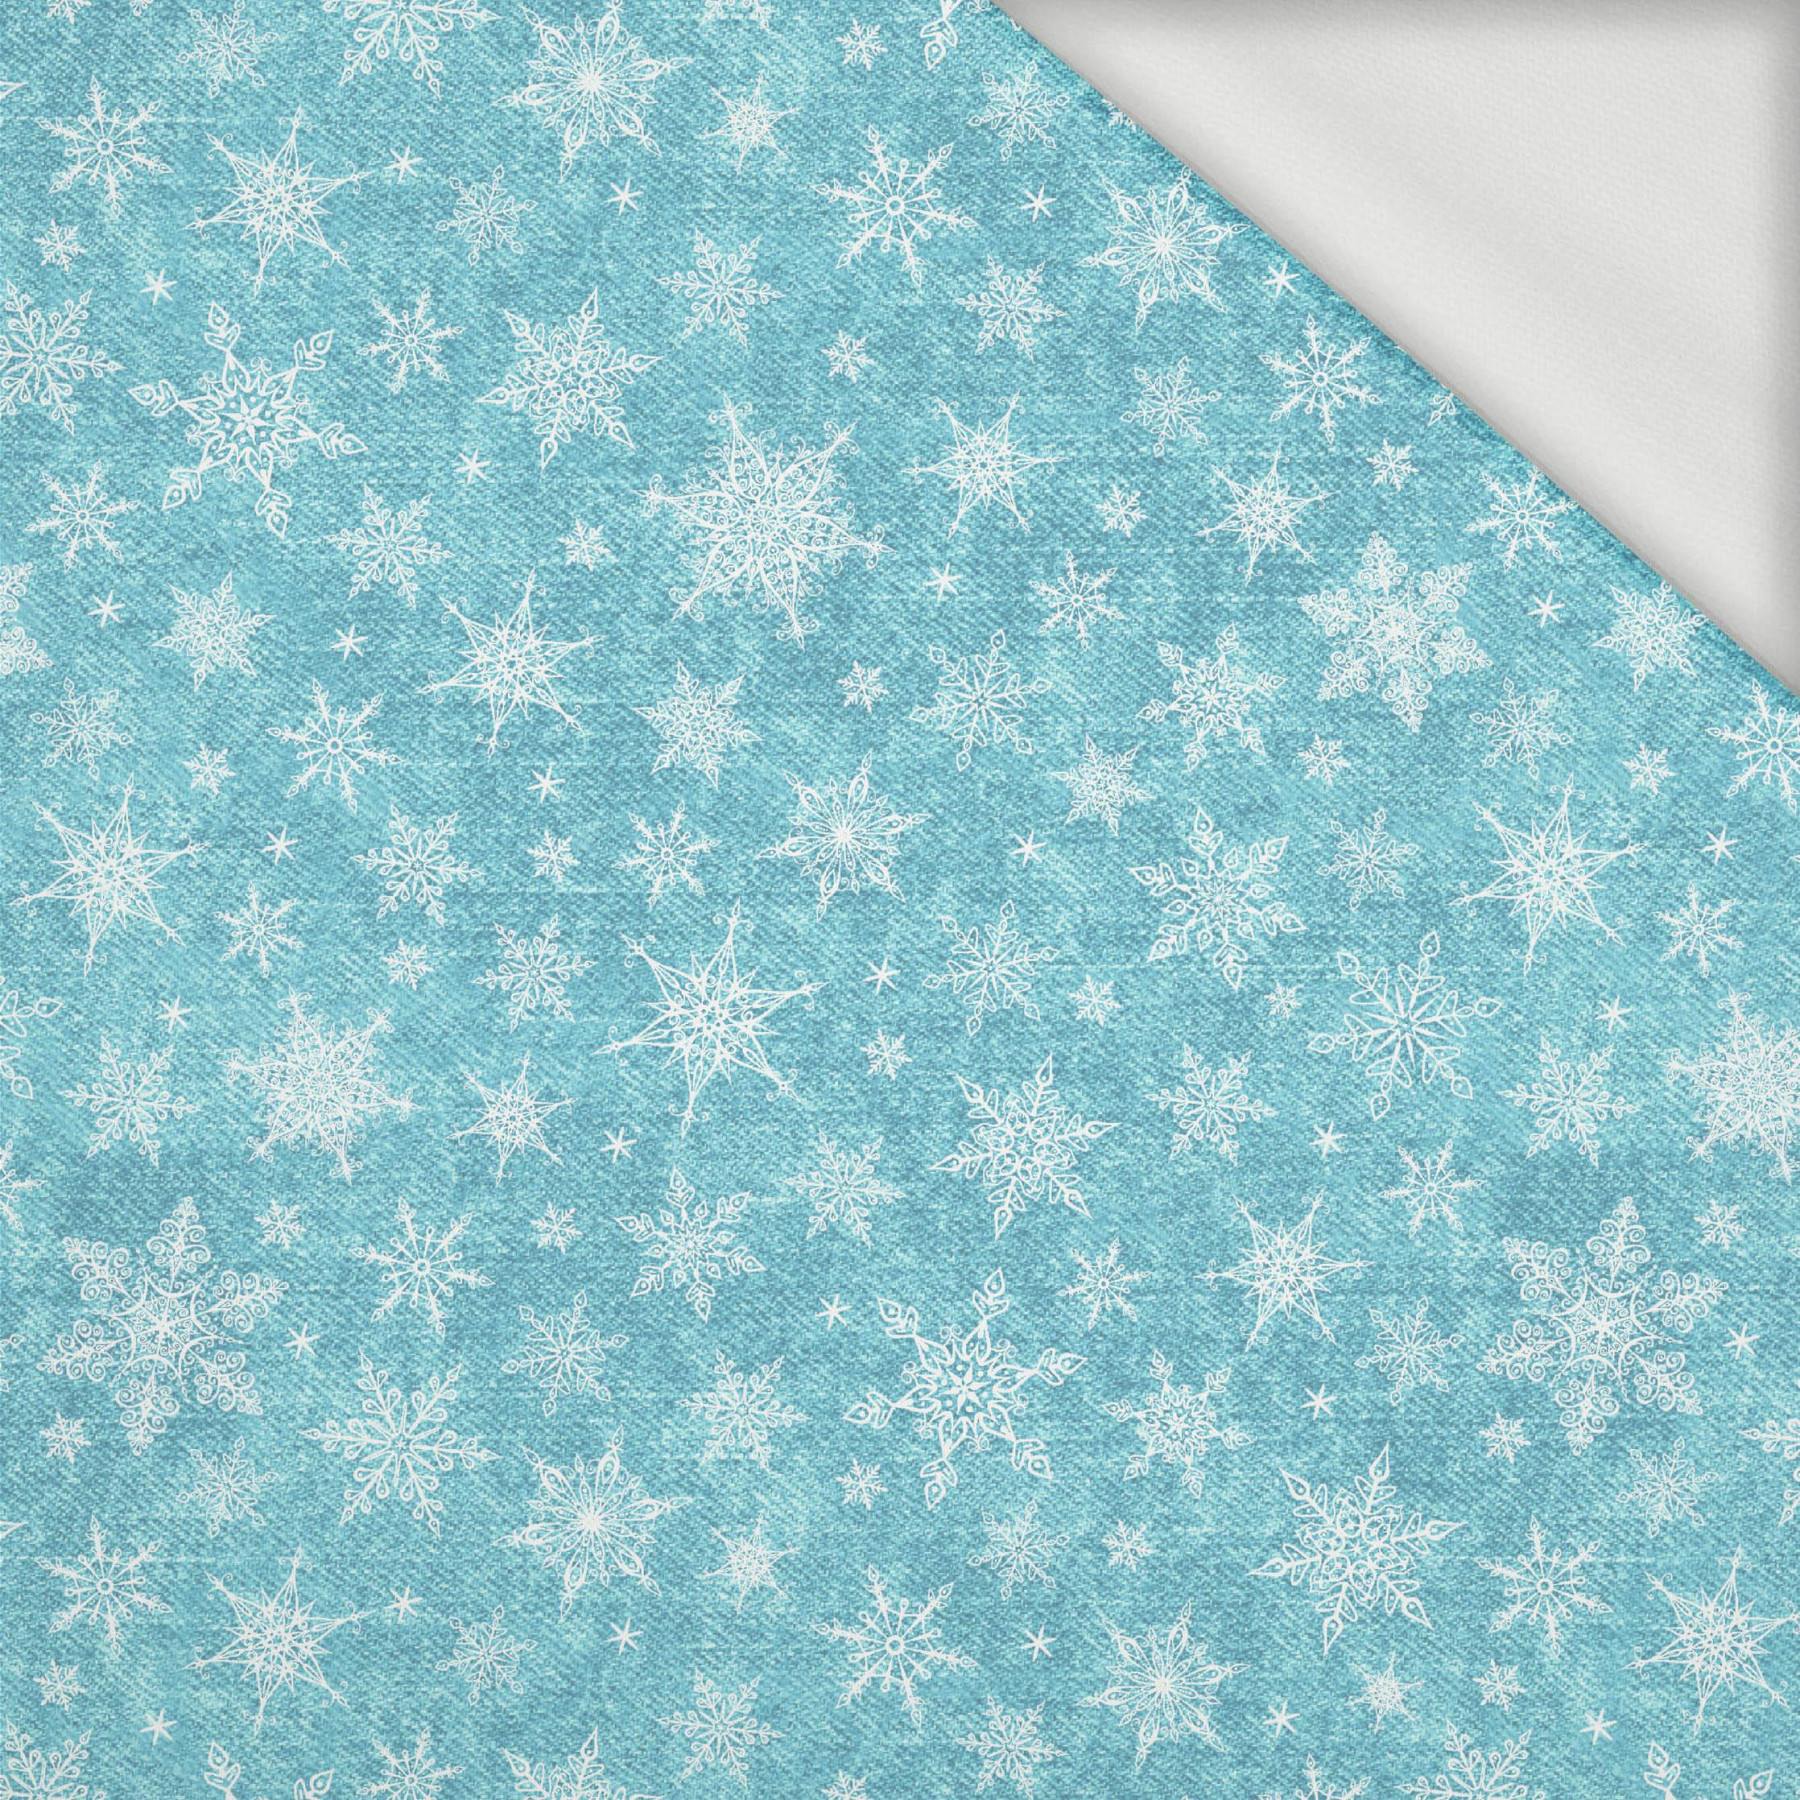 SNOWFLAKES PAT. 2 / ACID WASH SEA BLUE - looped knit fabric